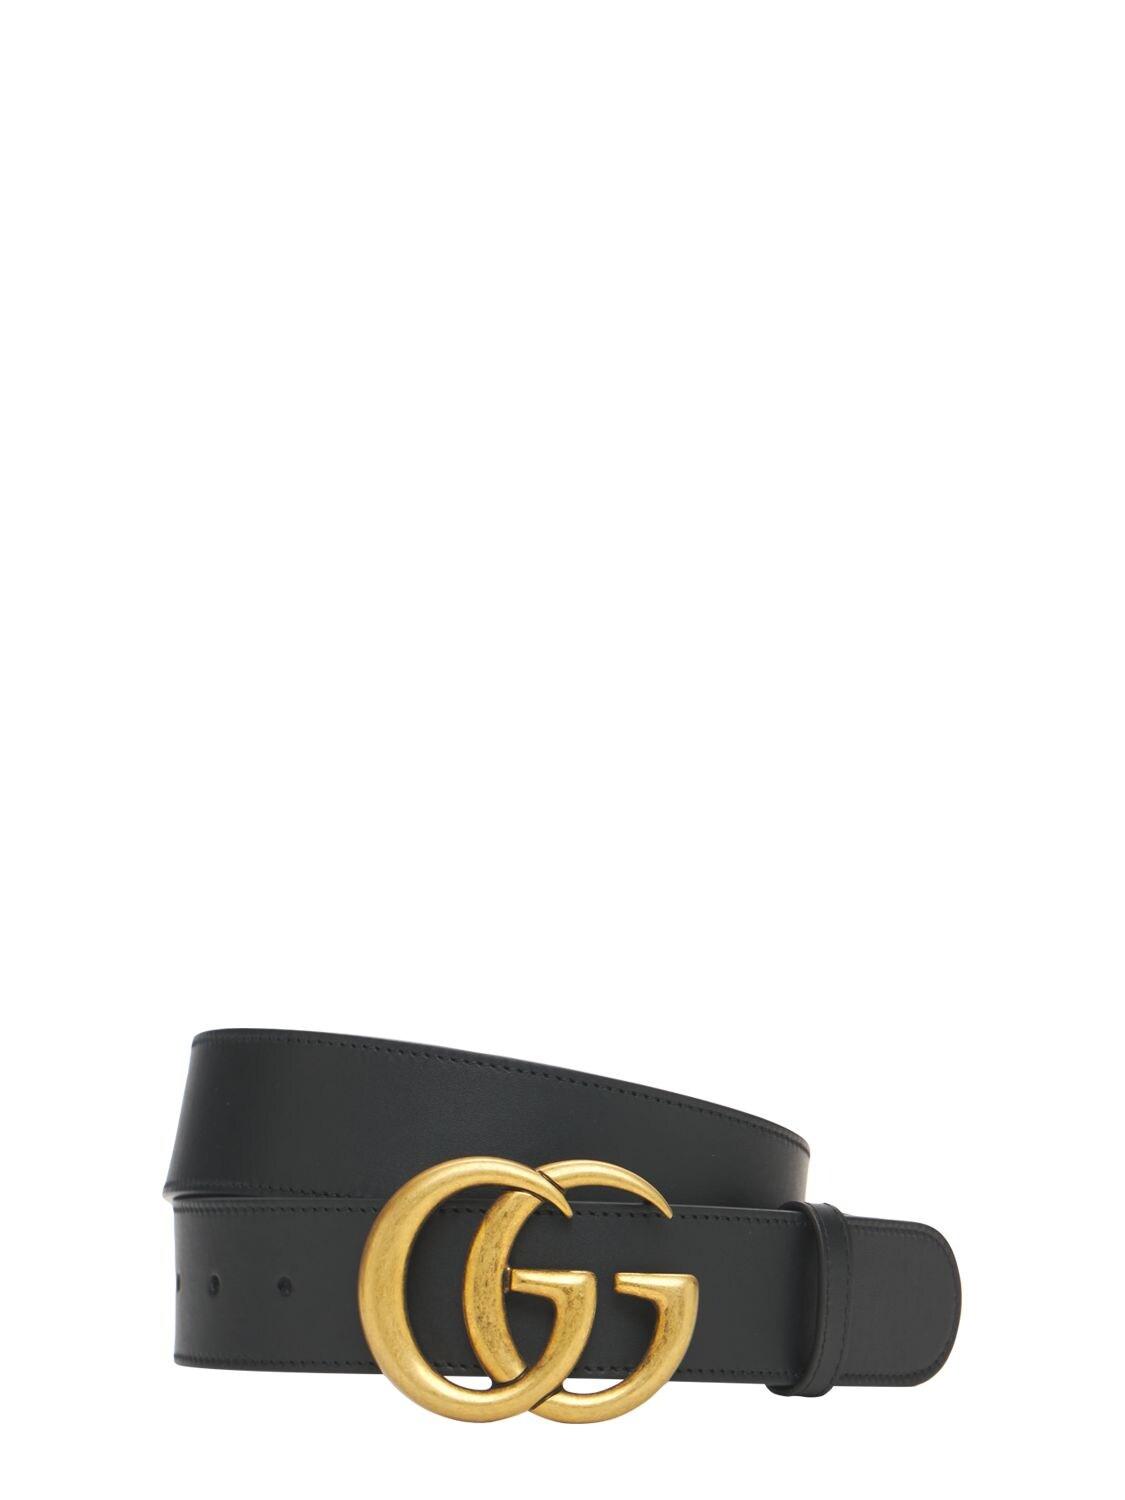 Gucci 4cm Gg Leather Belt in Black | Lyst